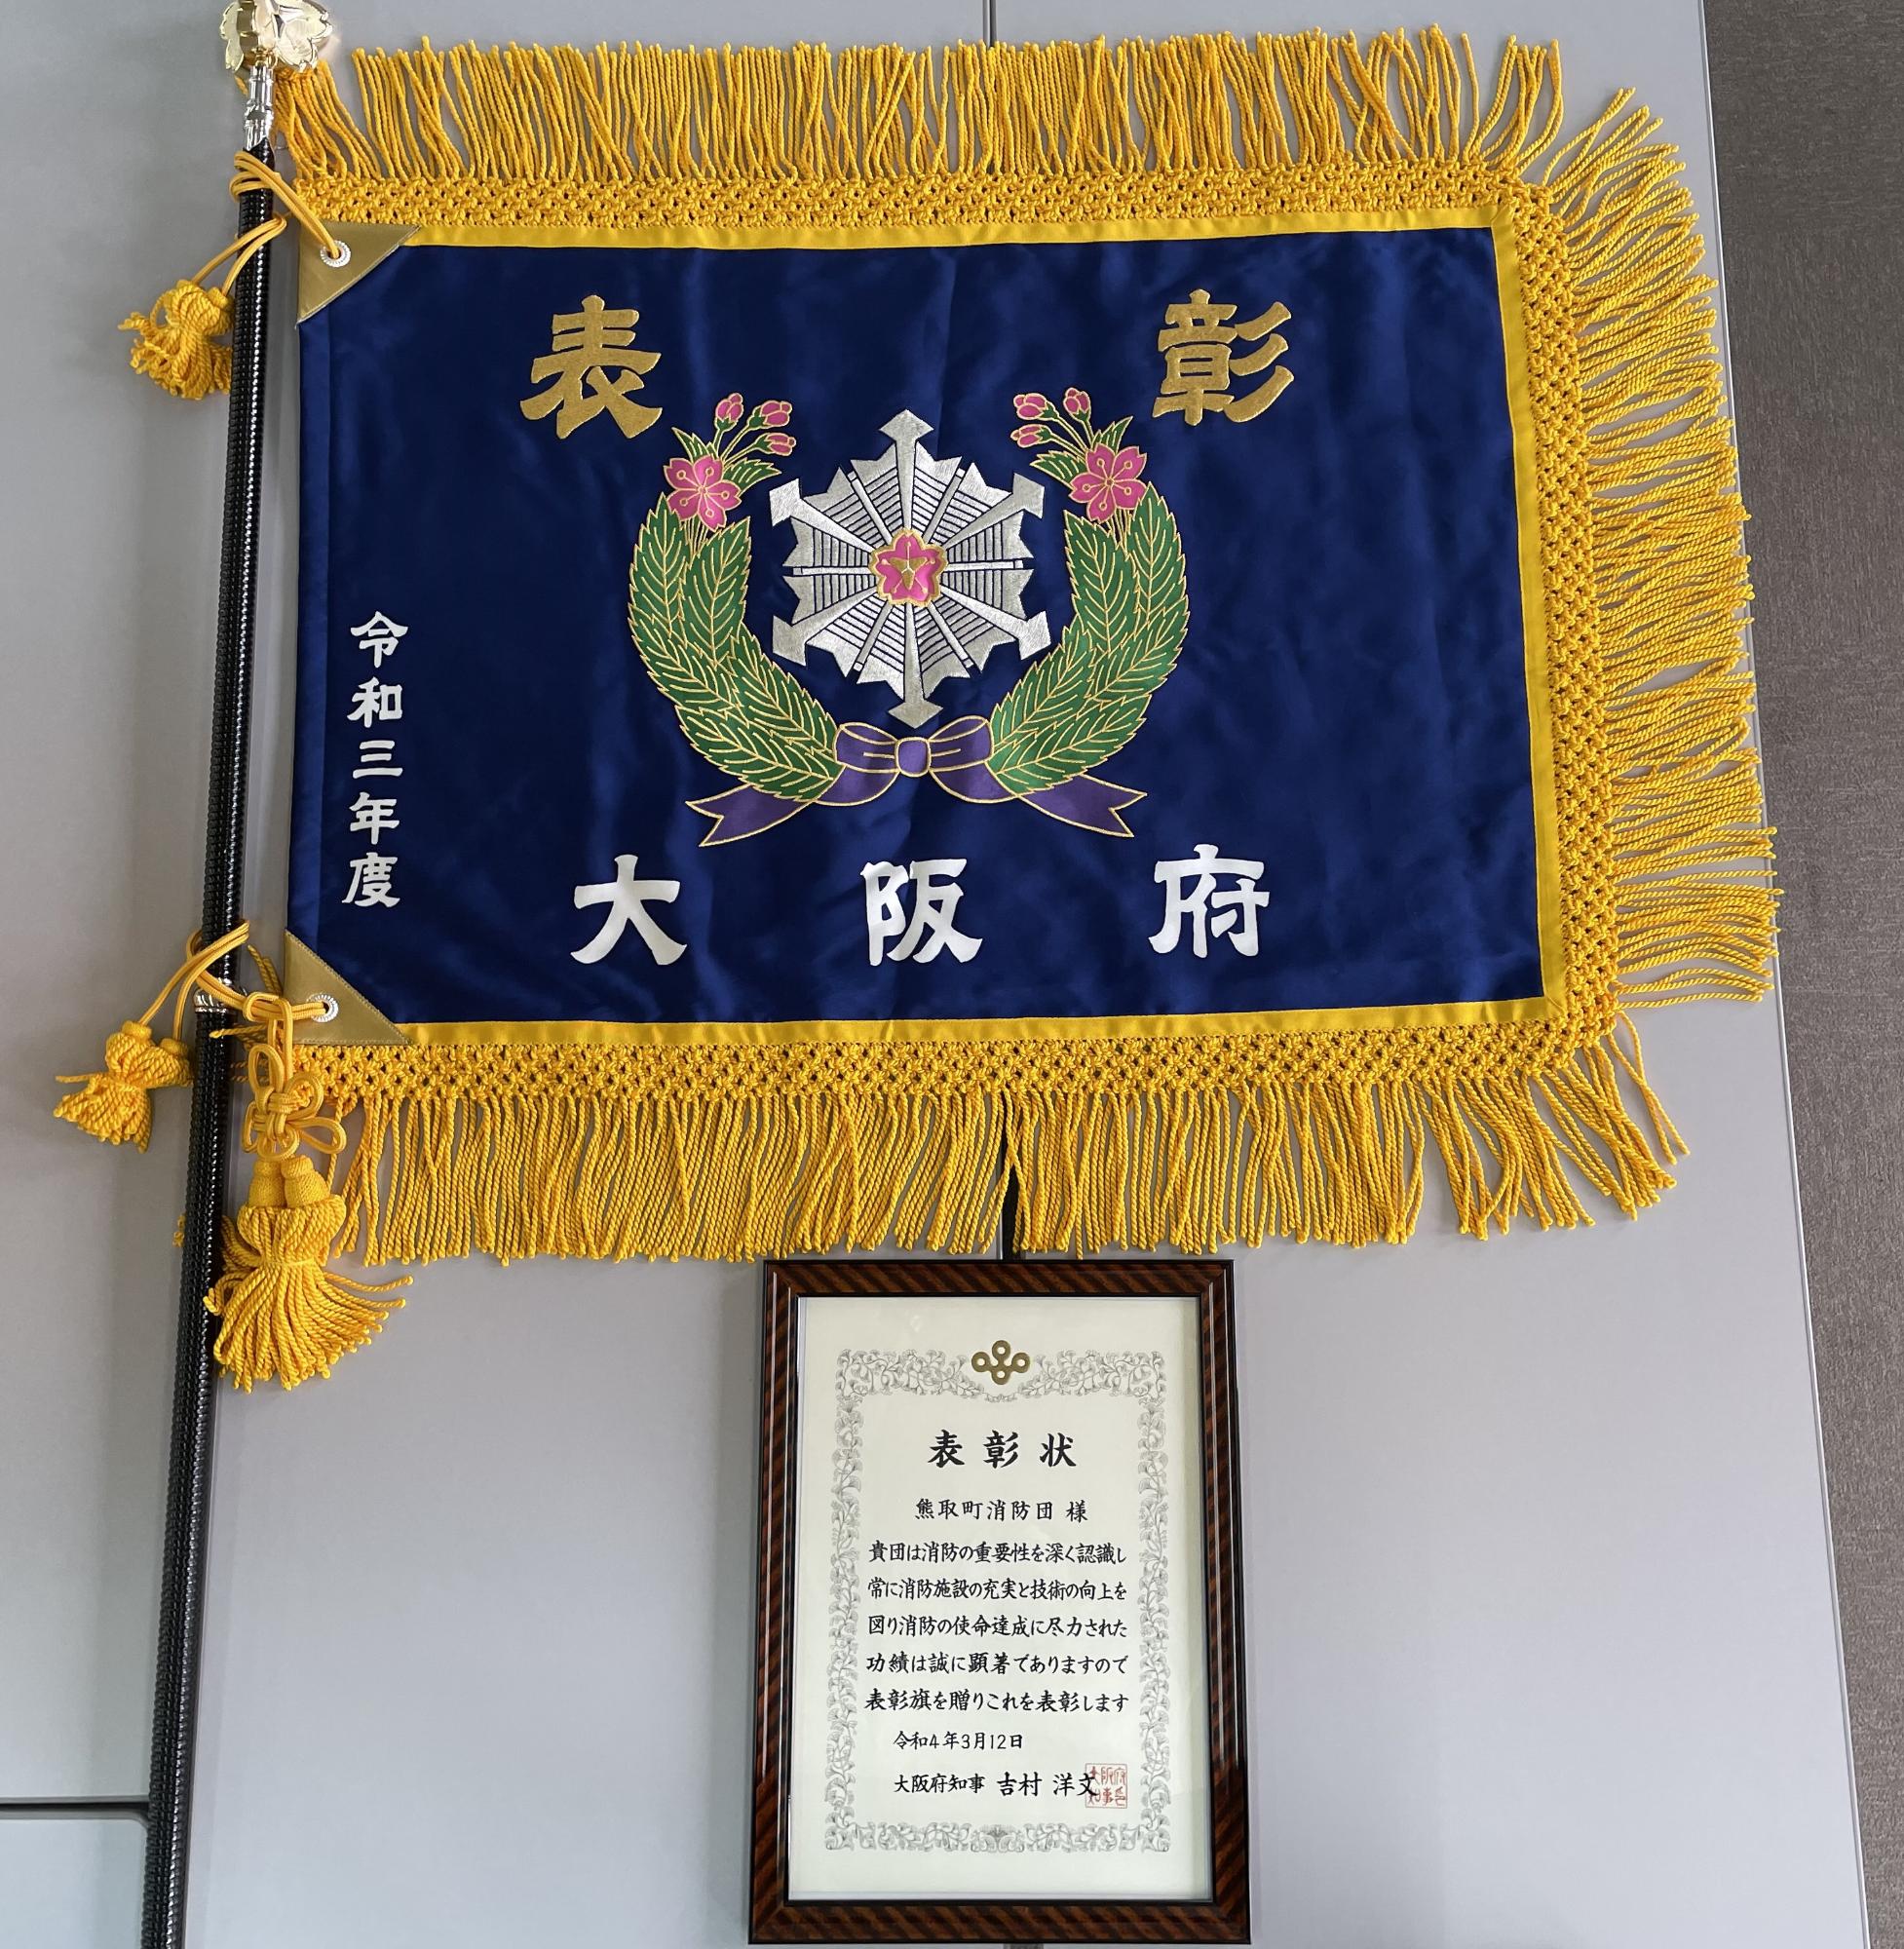 令和3年度大阪府知事表彰優勝機関表彰の表彰状と表彰旗の写真